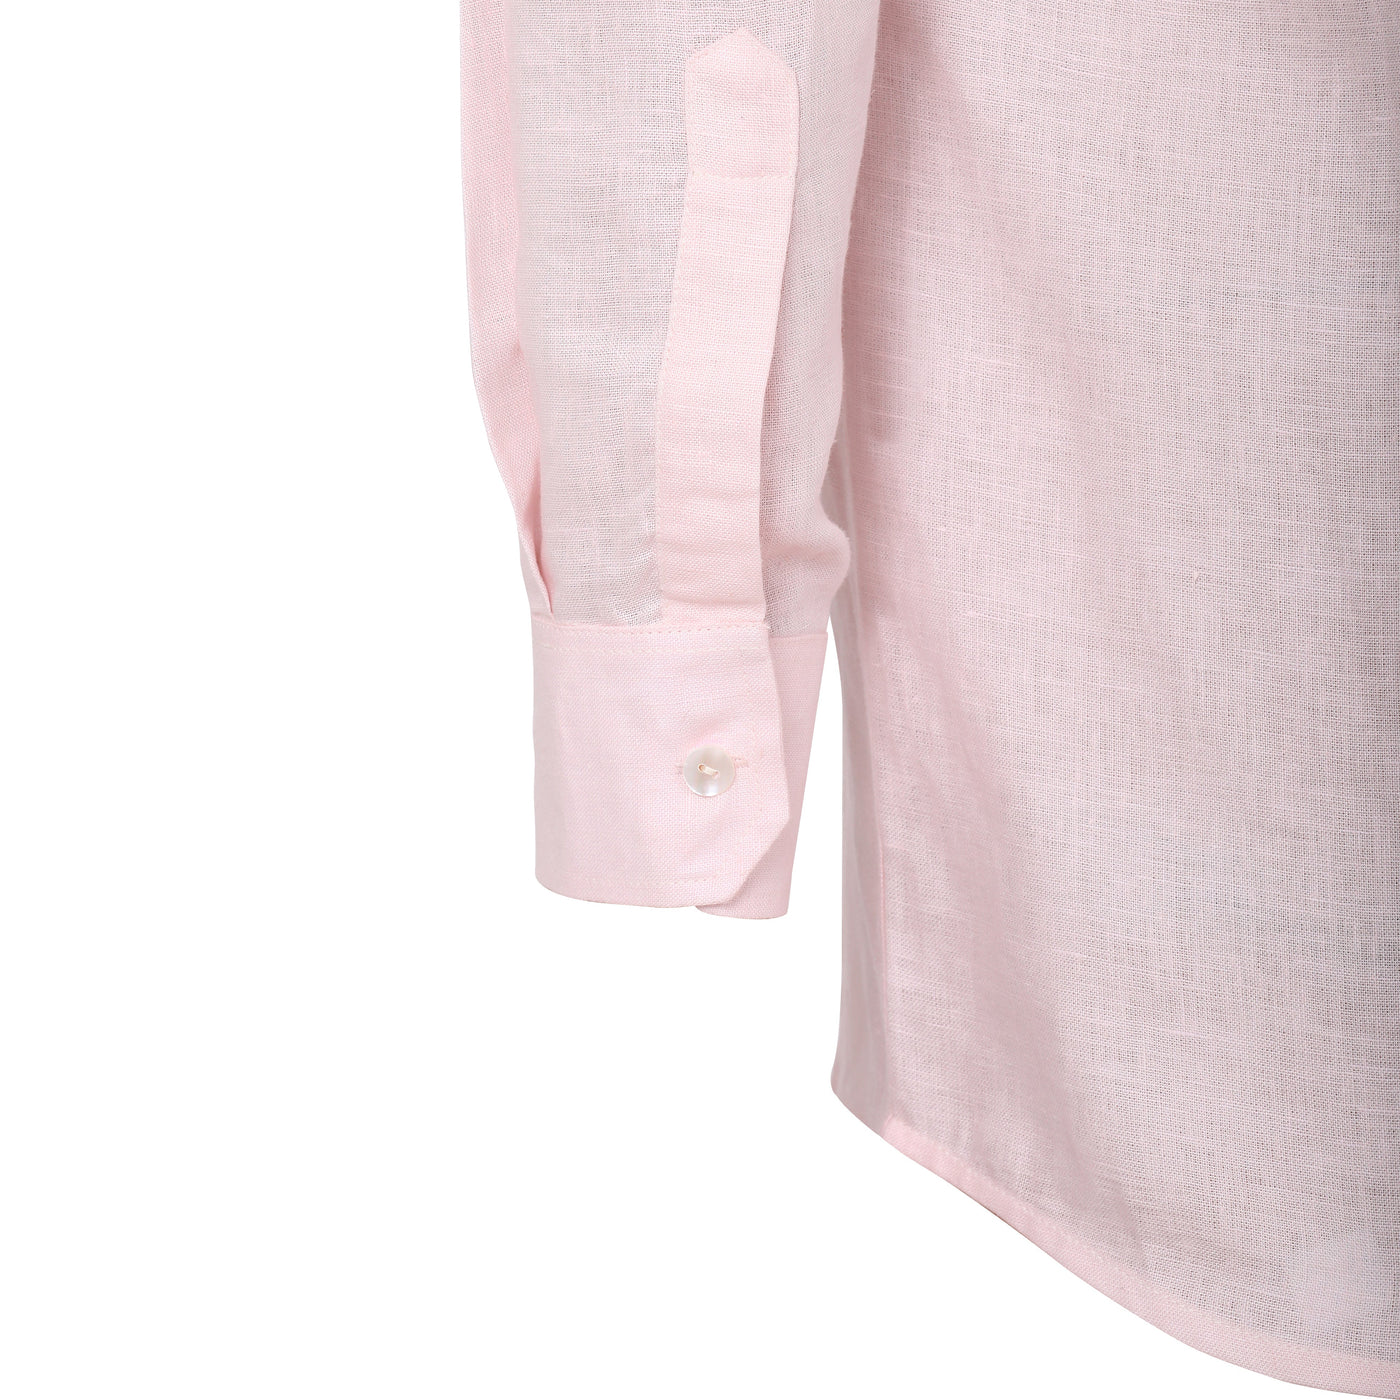 Men Solid Hemp Pink Formal Shirt